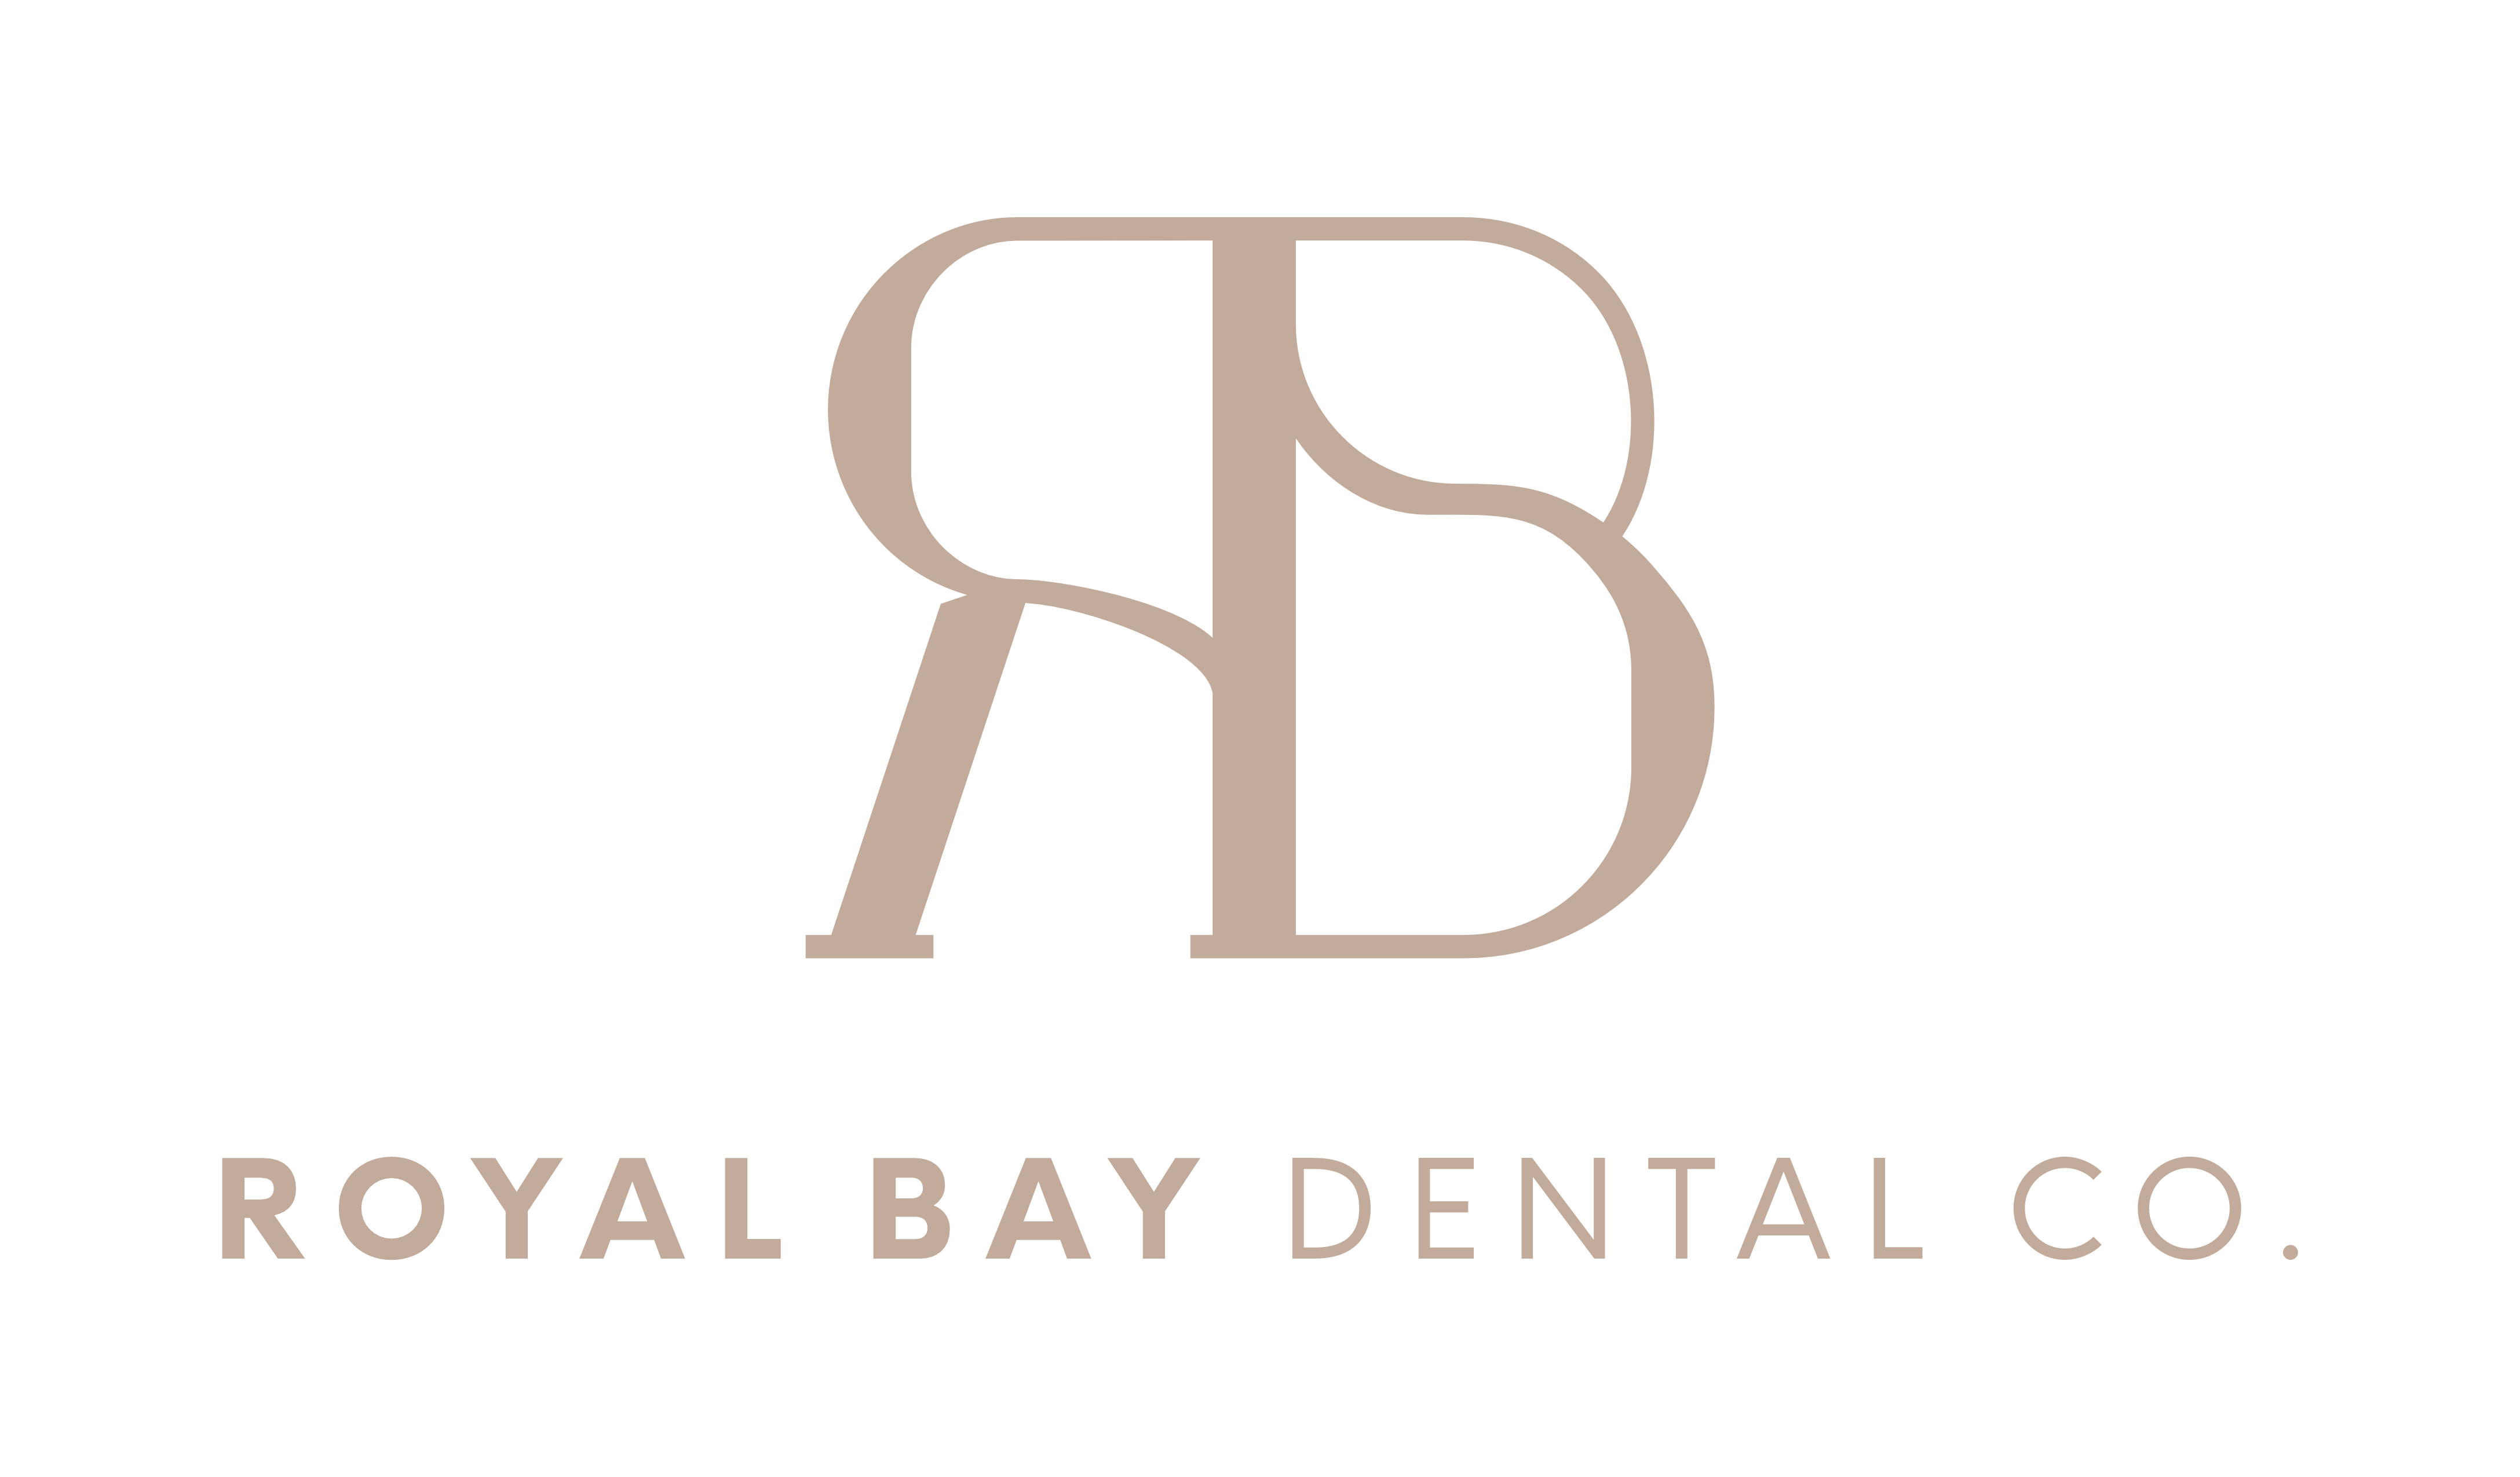 Royal Bay Dental Co. 